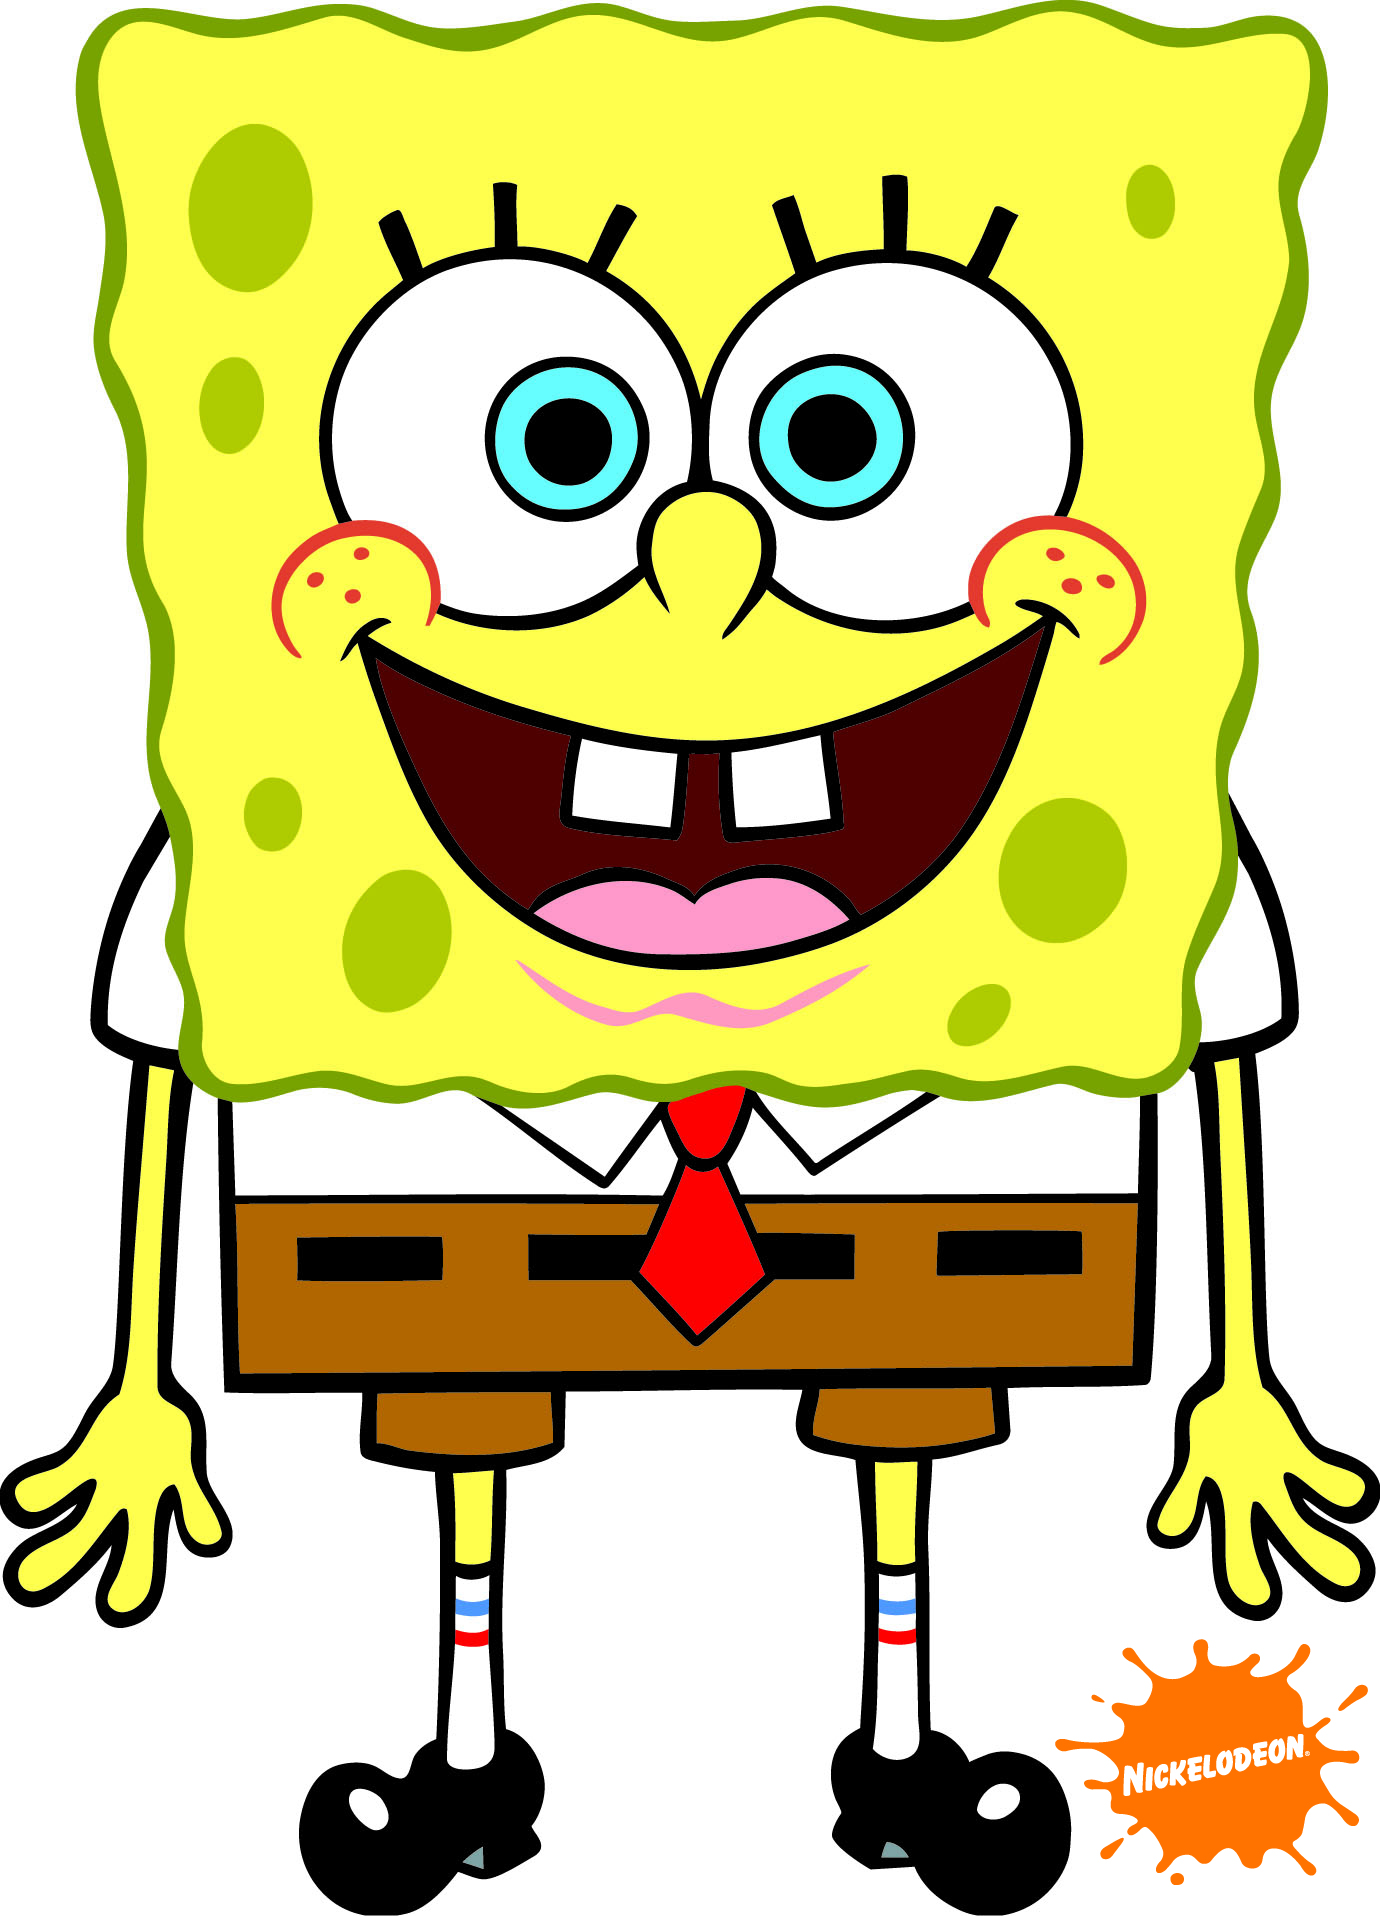 Spongebob images